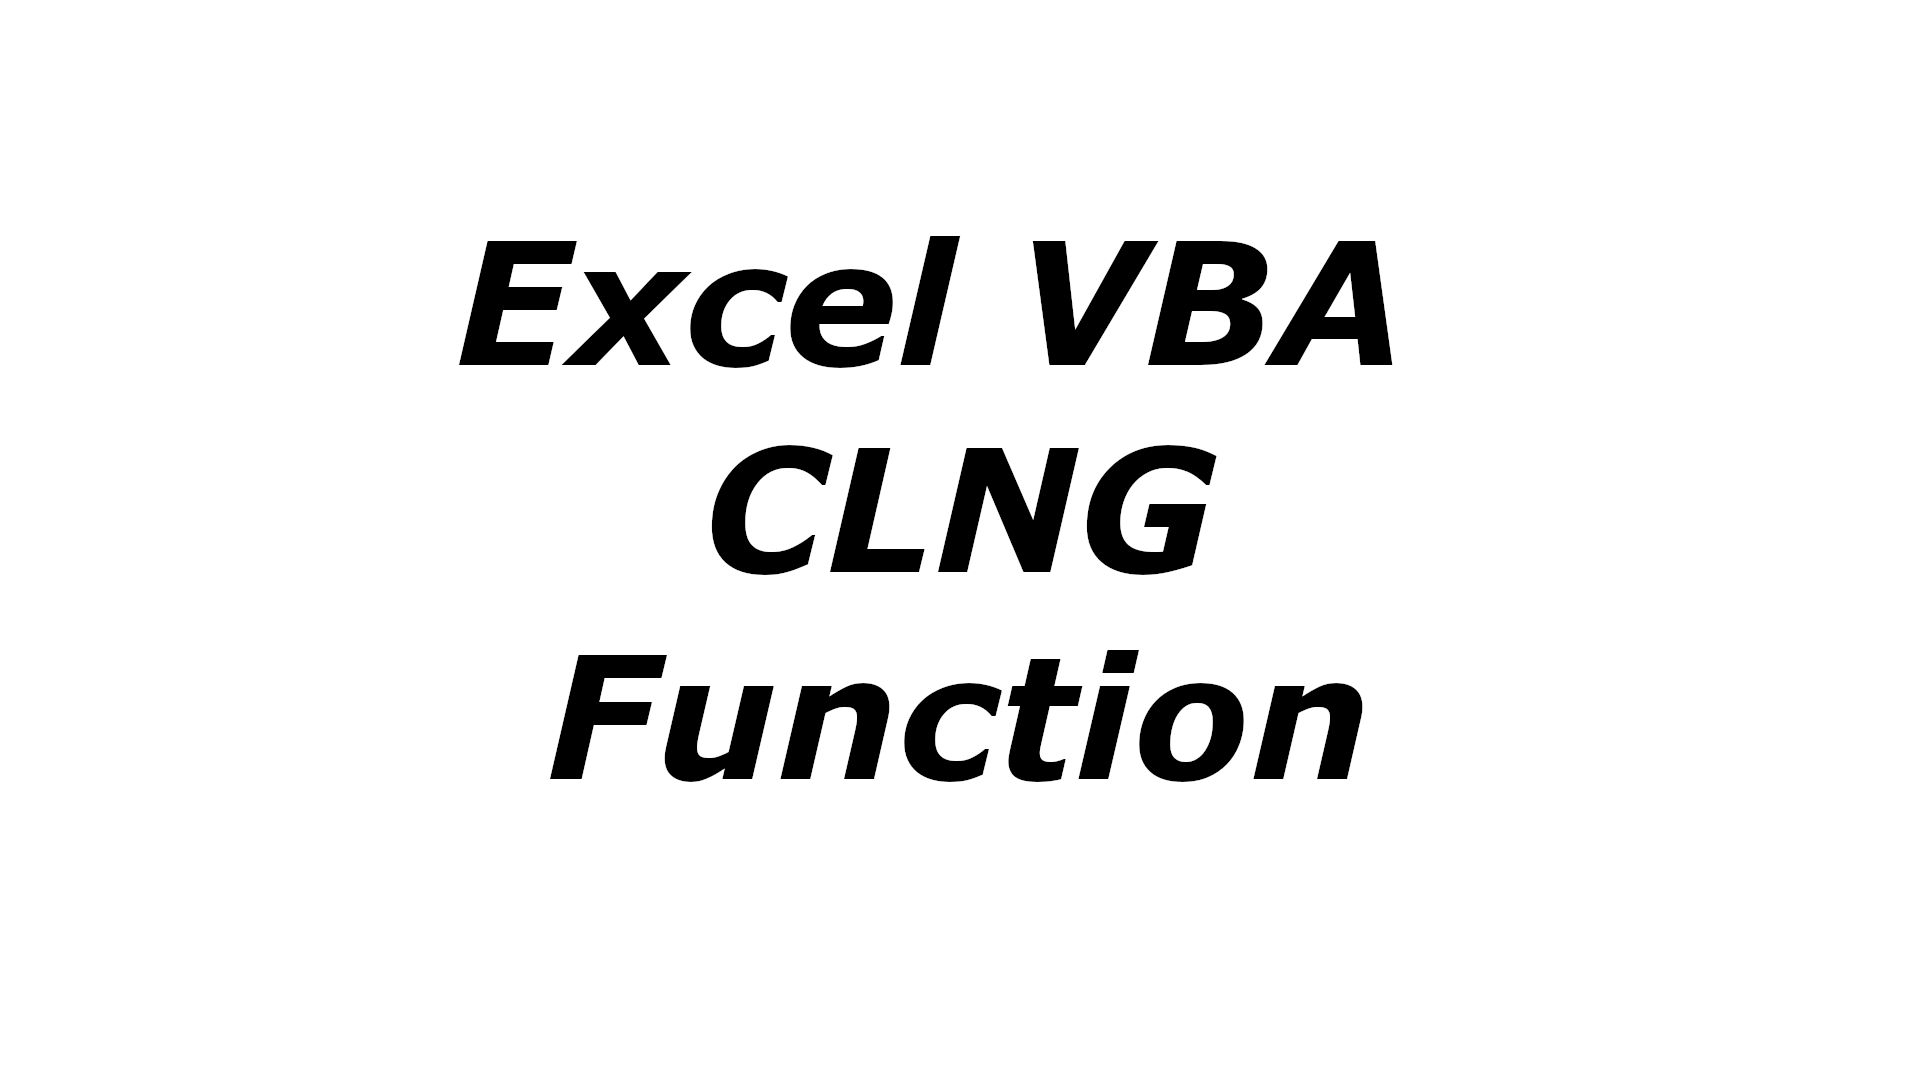 Excel VBA CLNG function